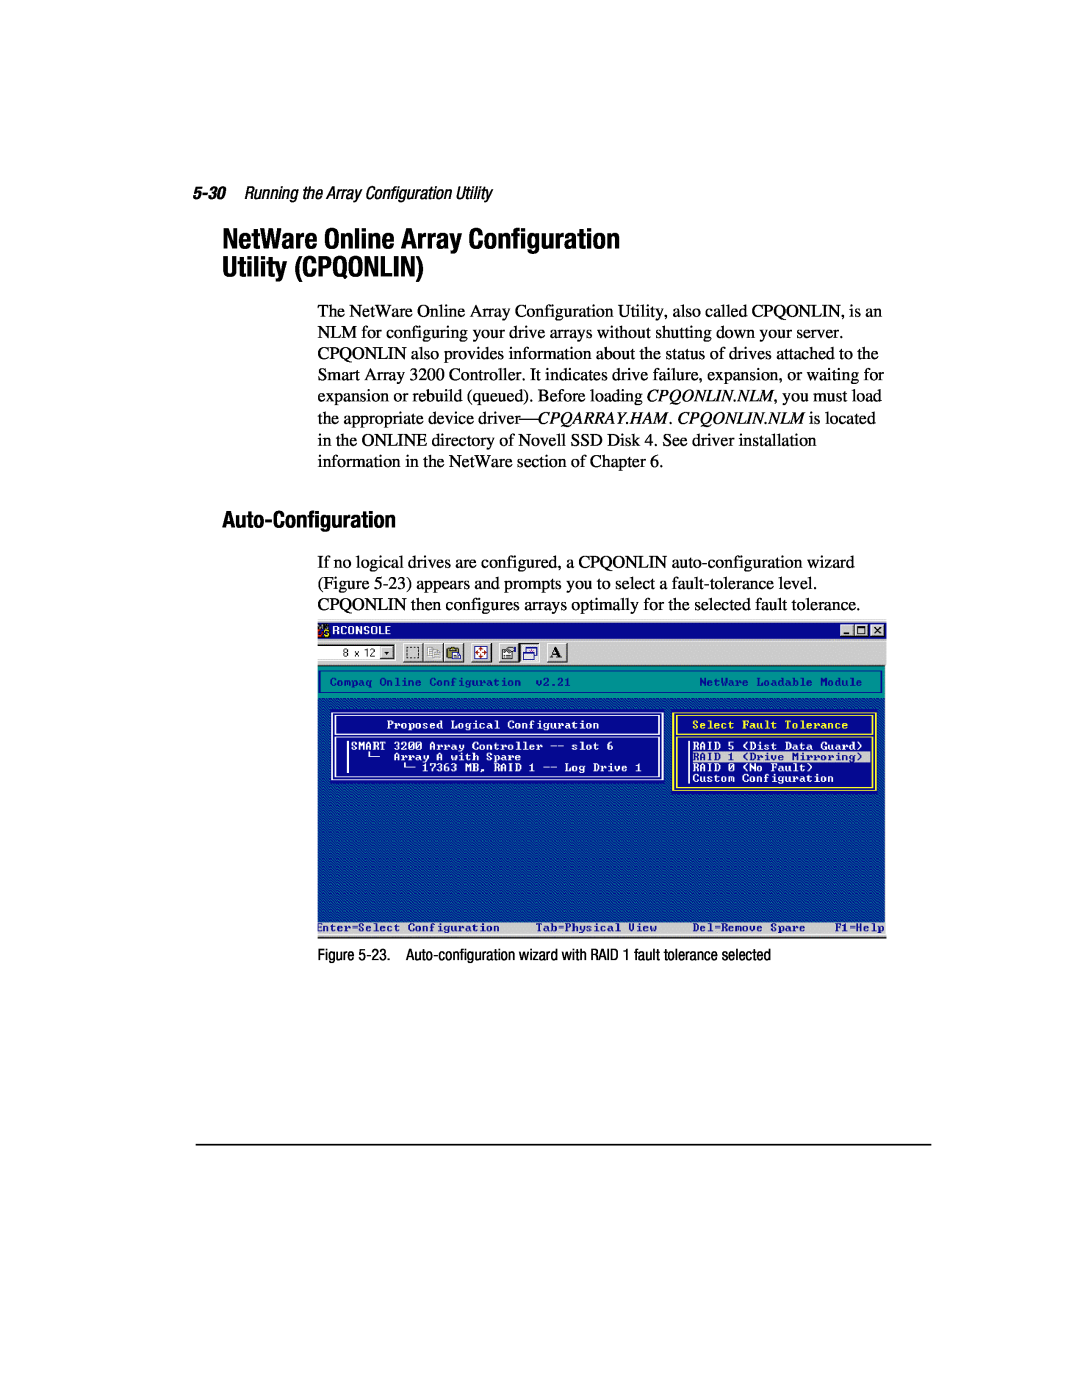 Compaq 3200 manual NetWare Online Array Configuration Utility CPQONLIN, Auto-Configuration 